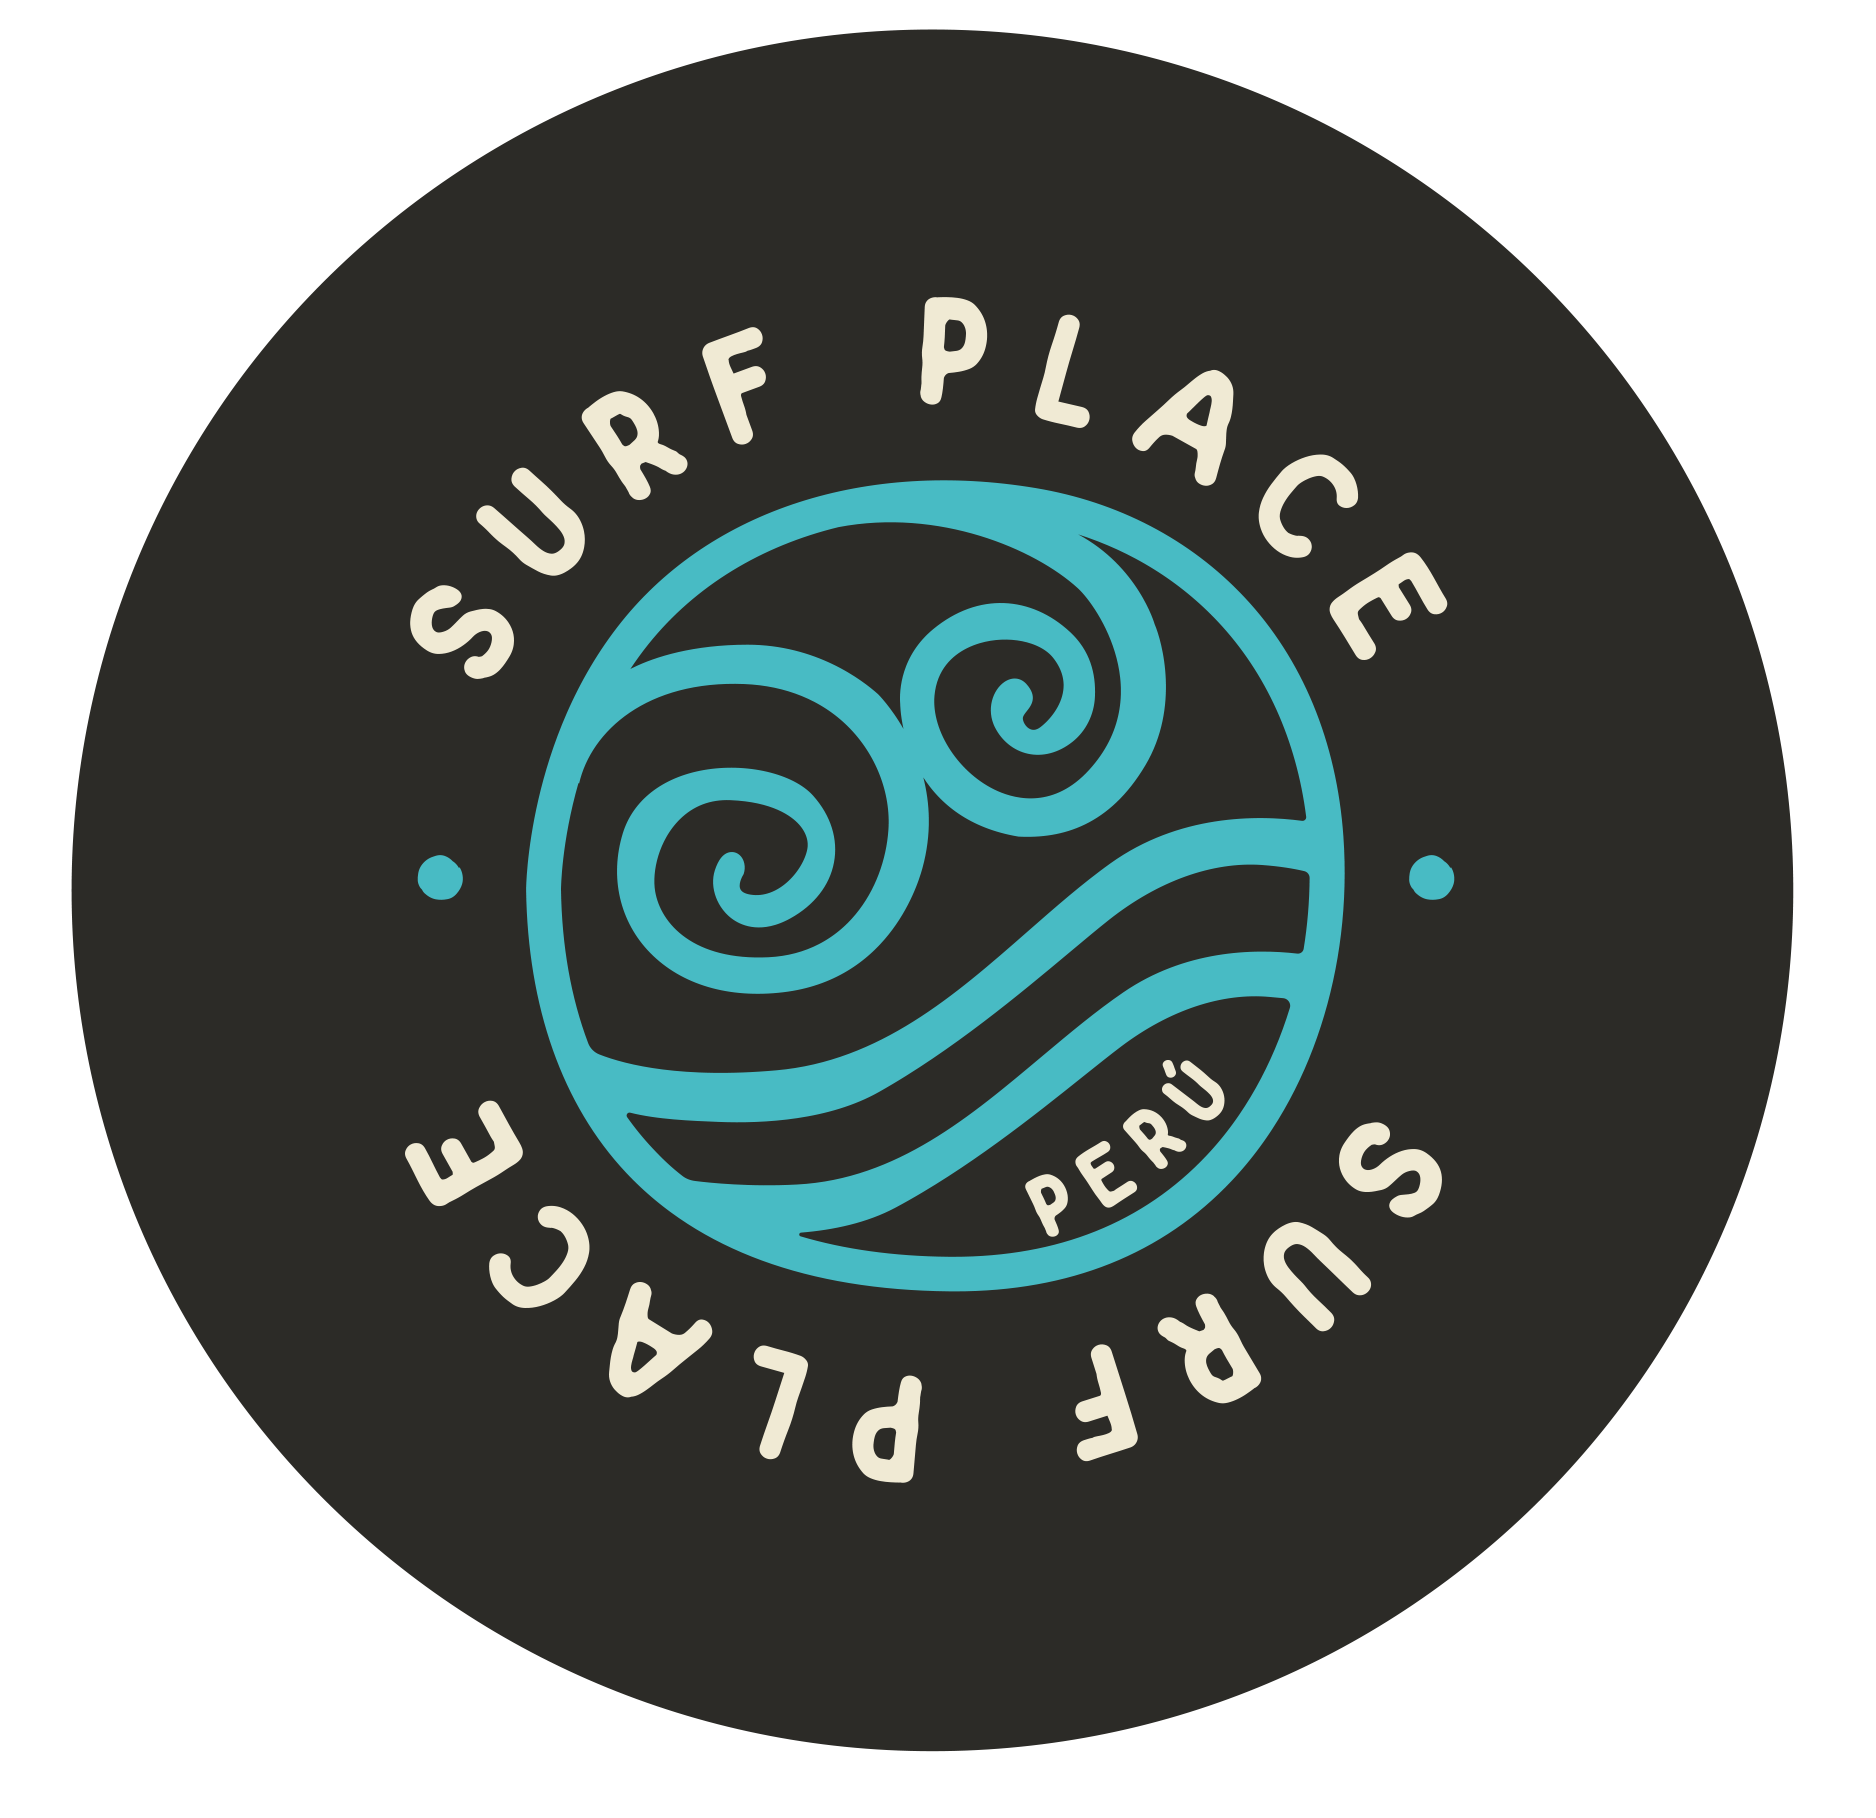 Surf Place Per煤